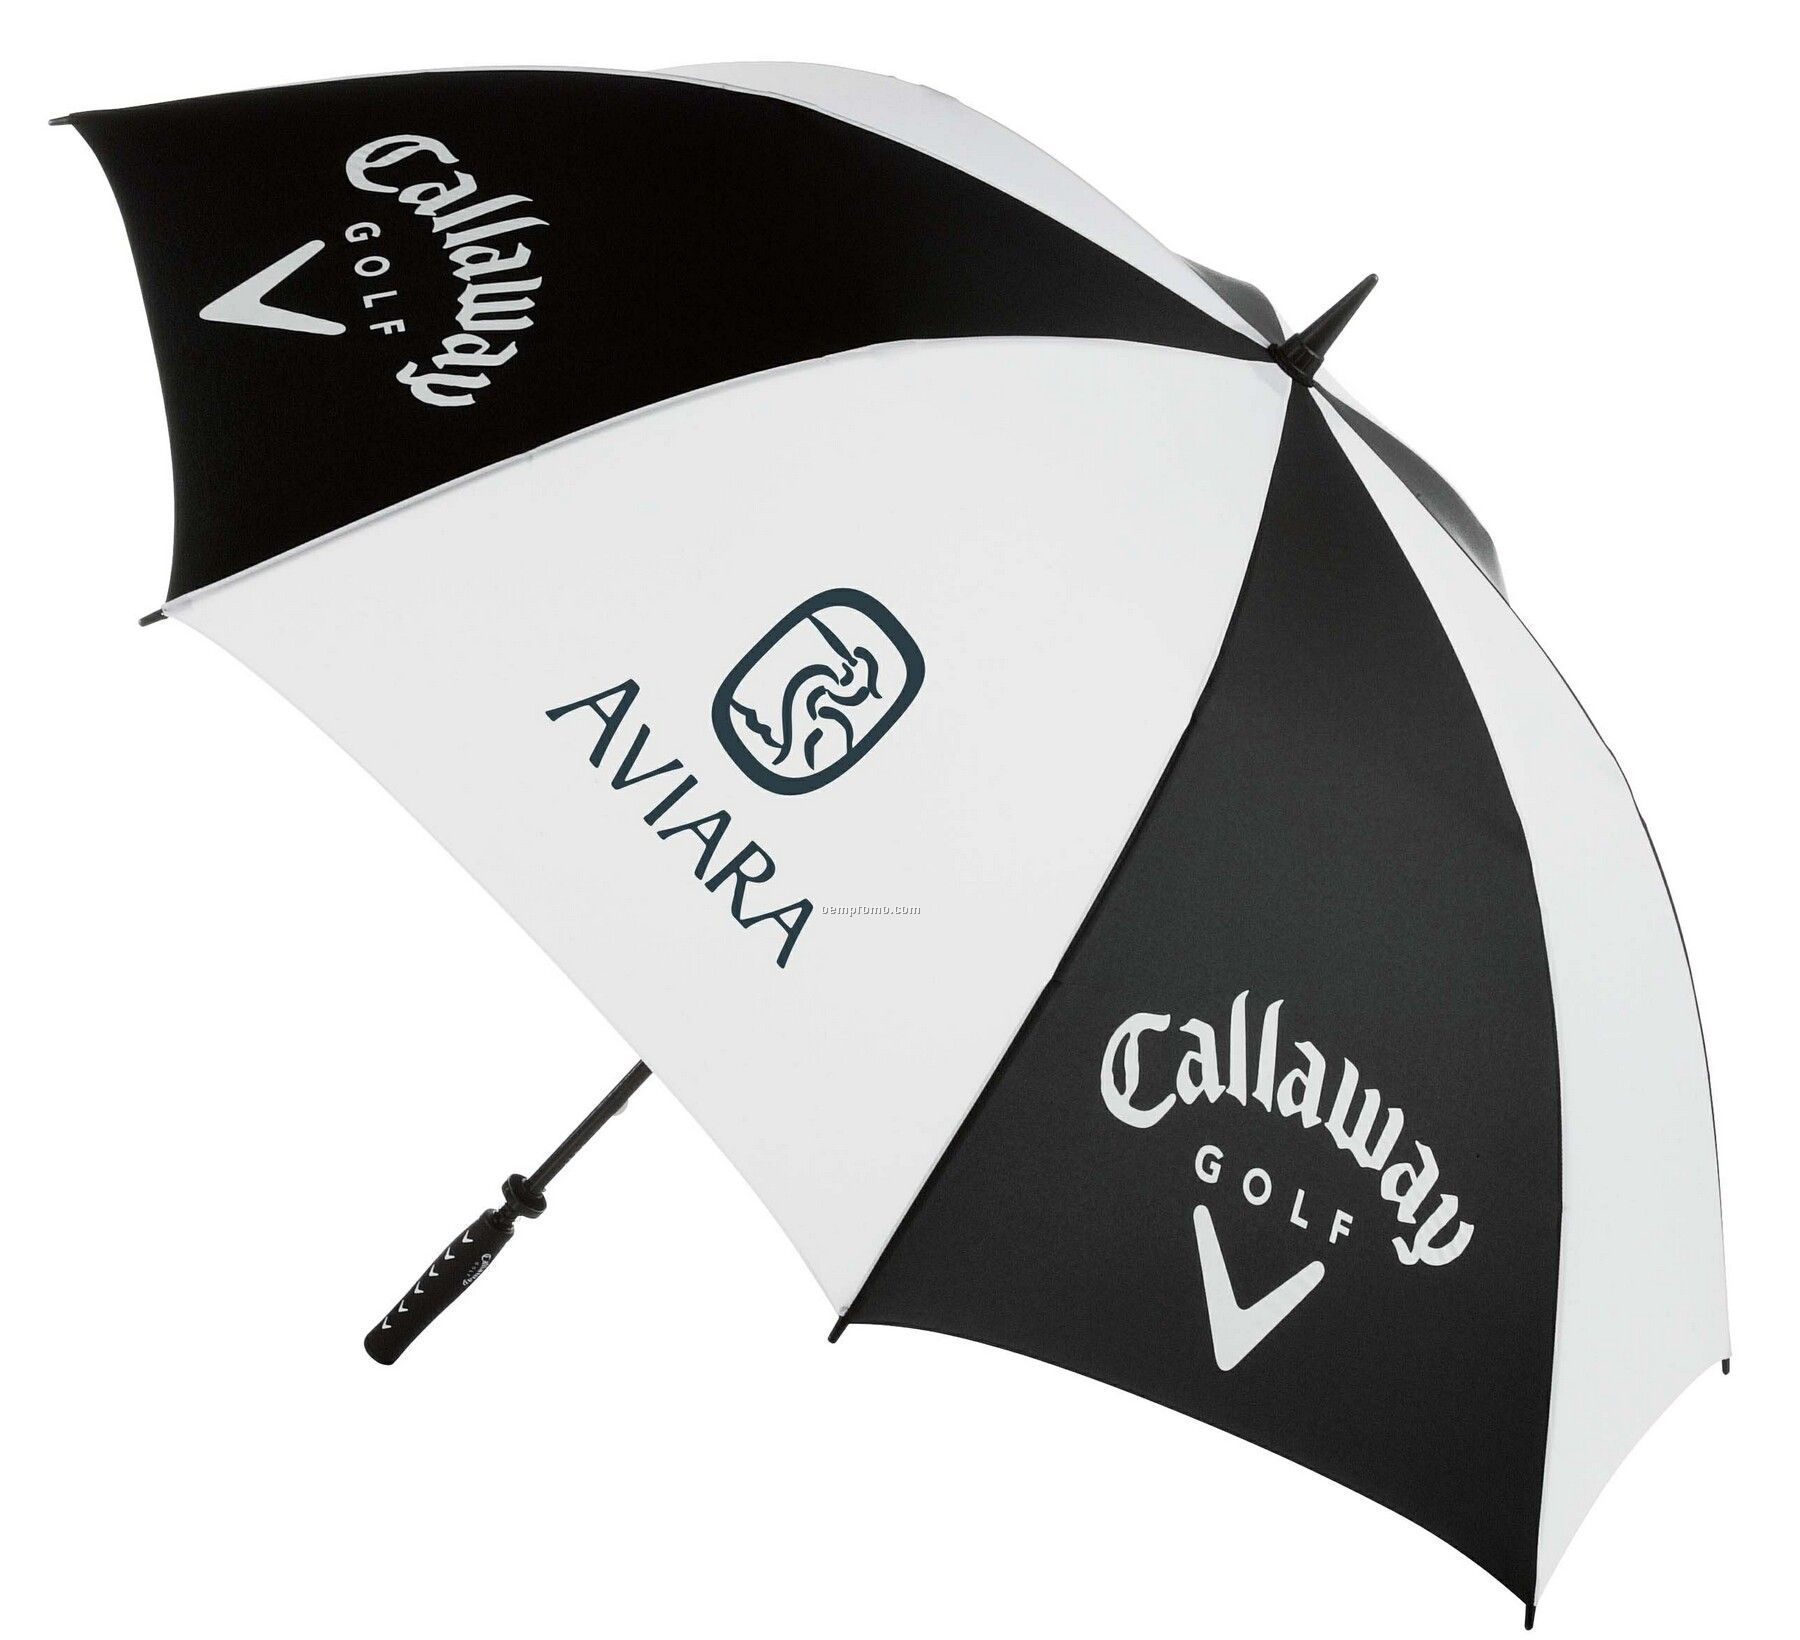 Callaway 64" Black & White Golf Umbrella